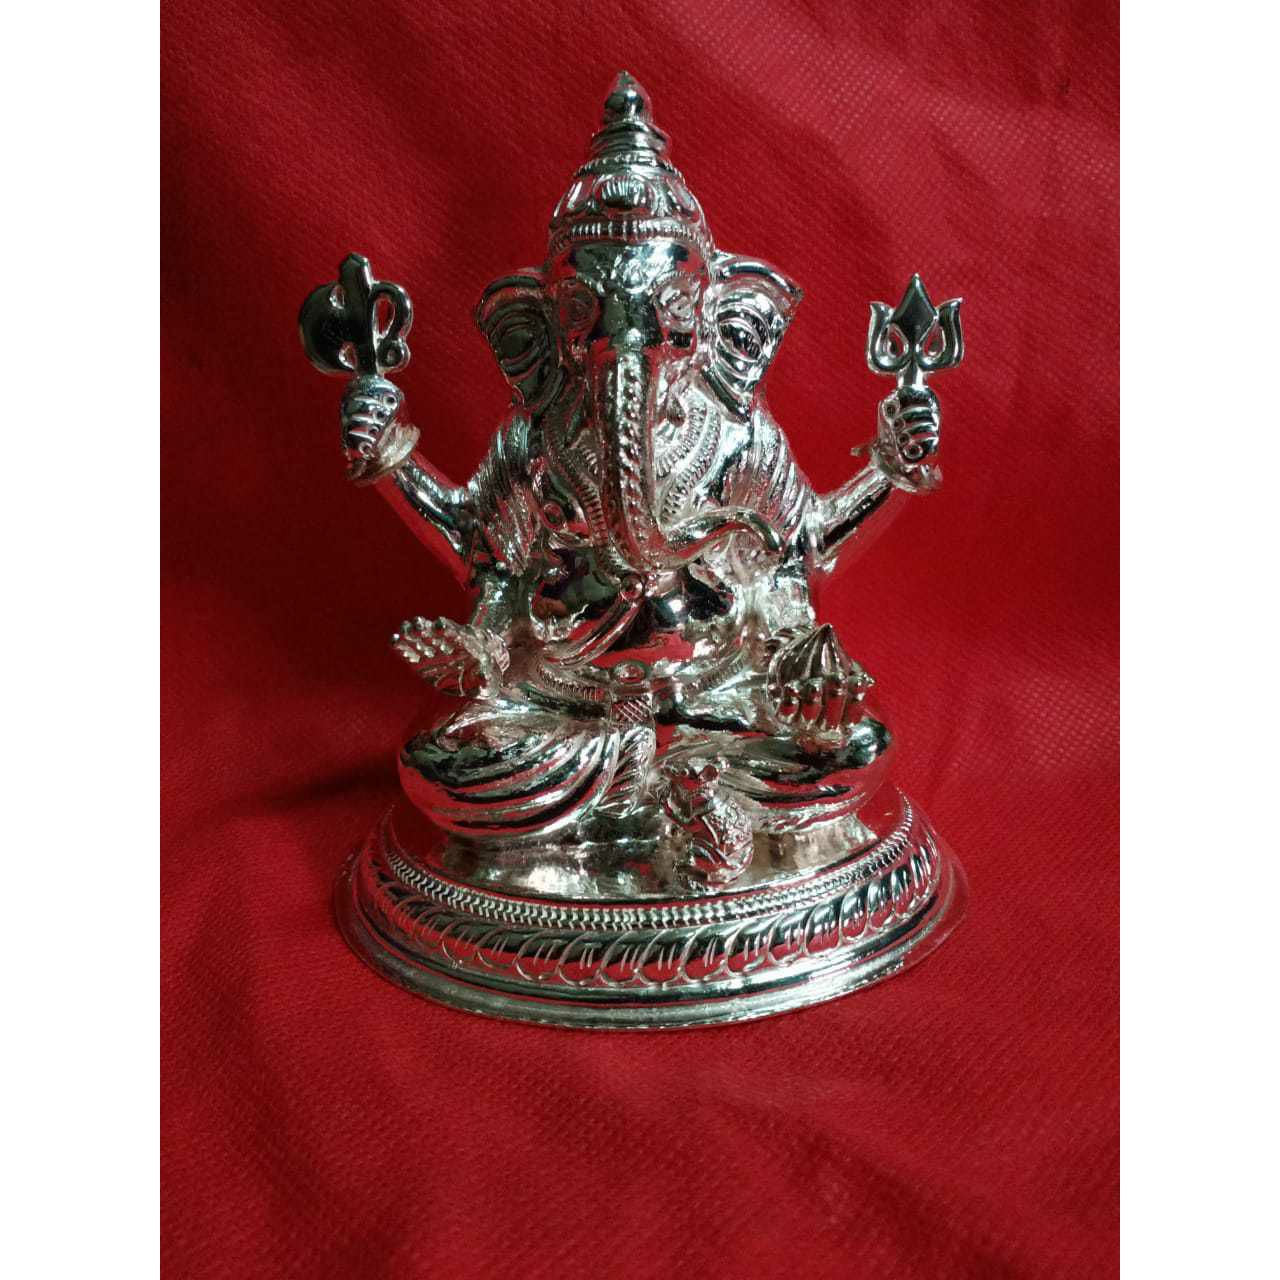 Round(Goal) Plate Cholel nakshi Ganpatiji Murti(Bhagvan,God,Idols) Ms-2335